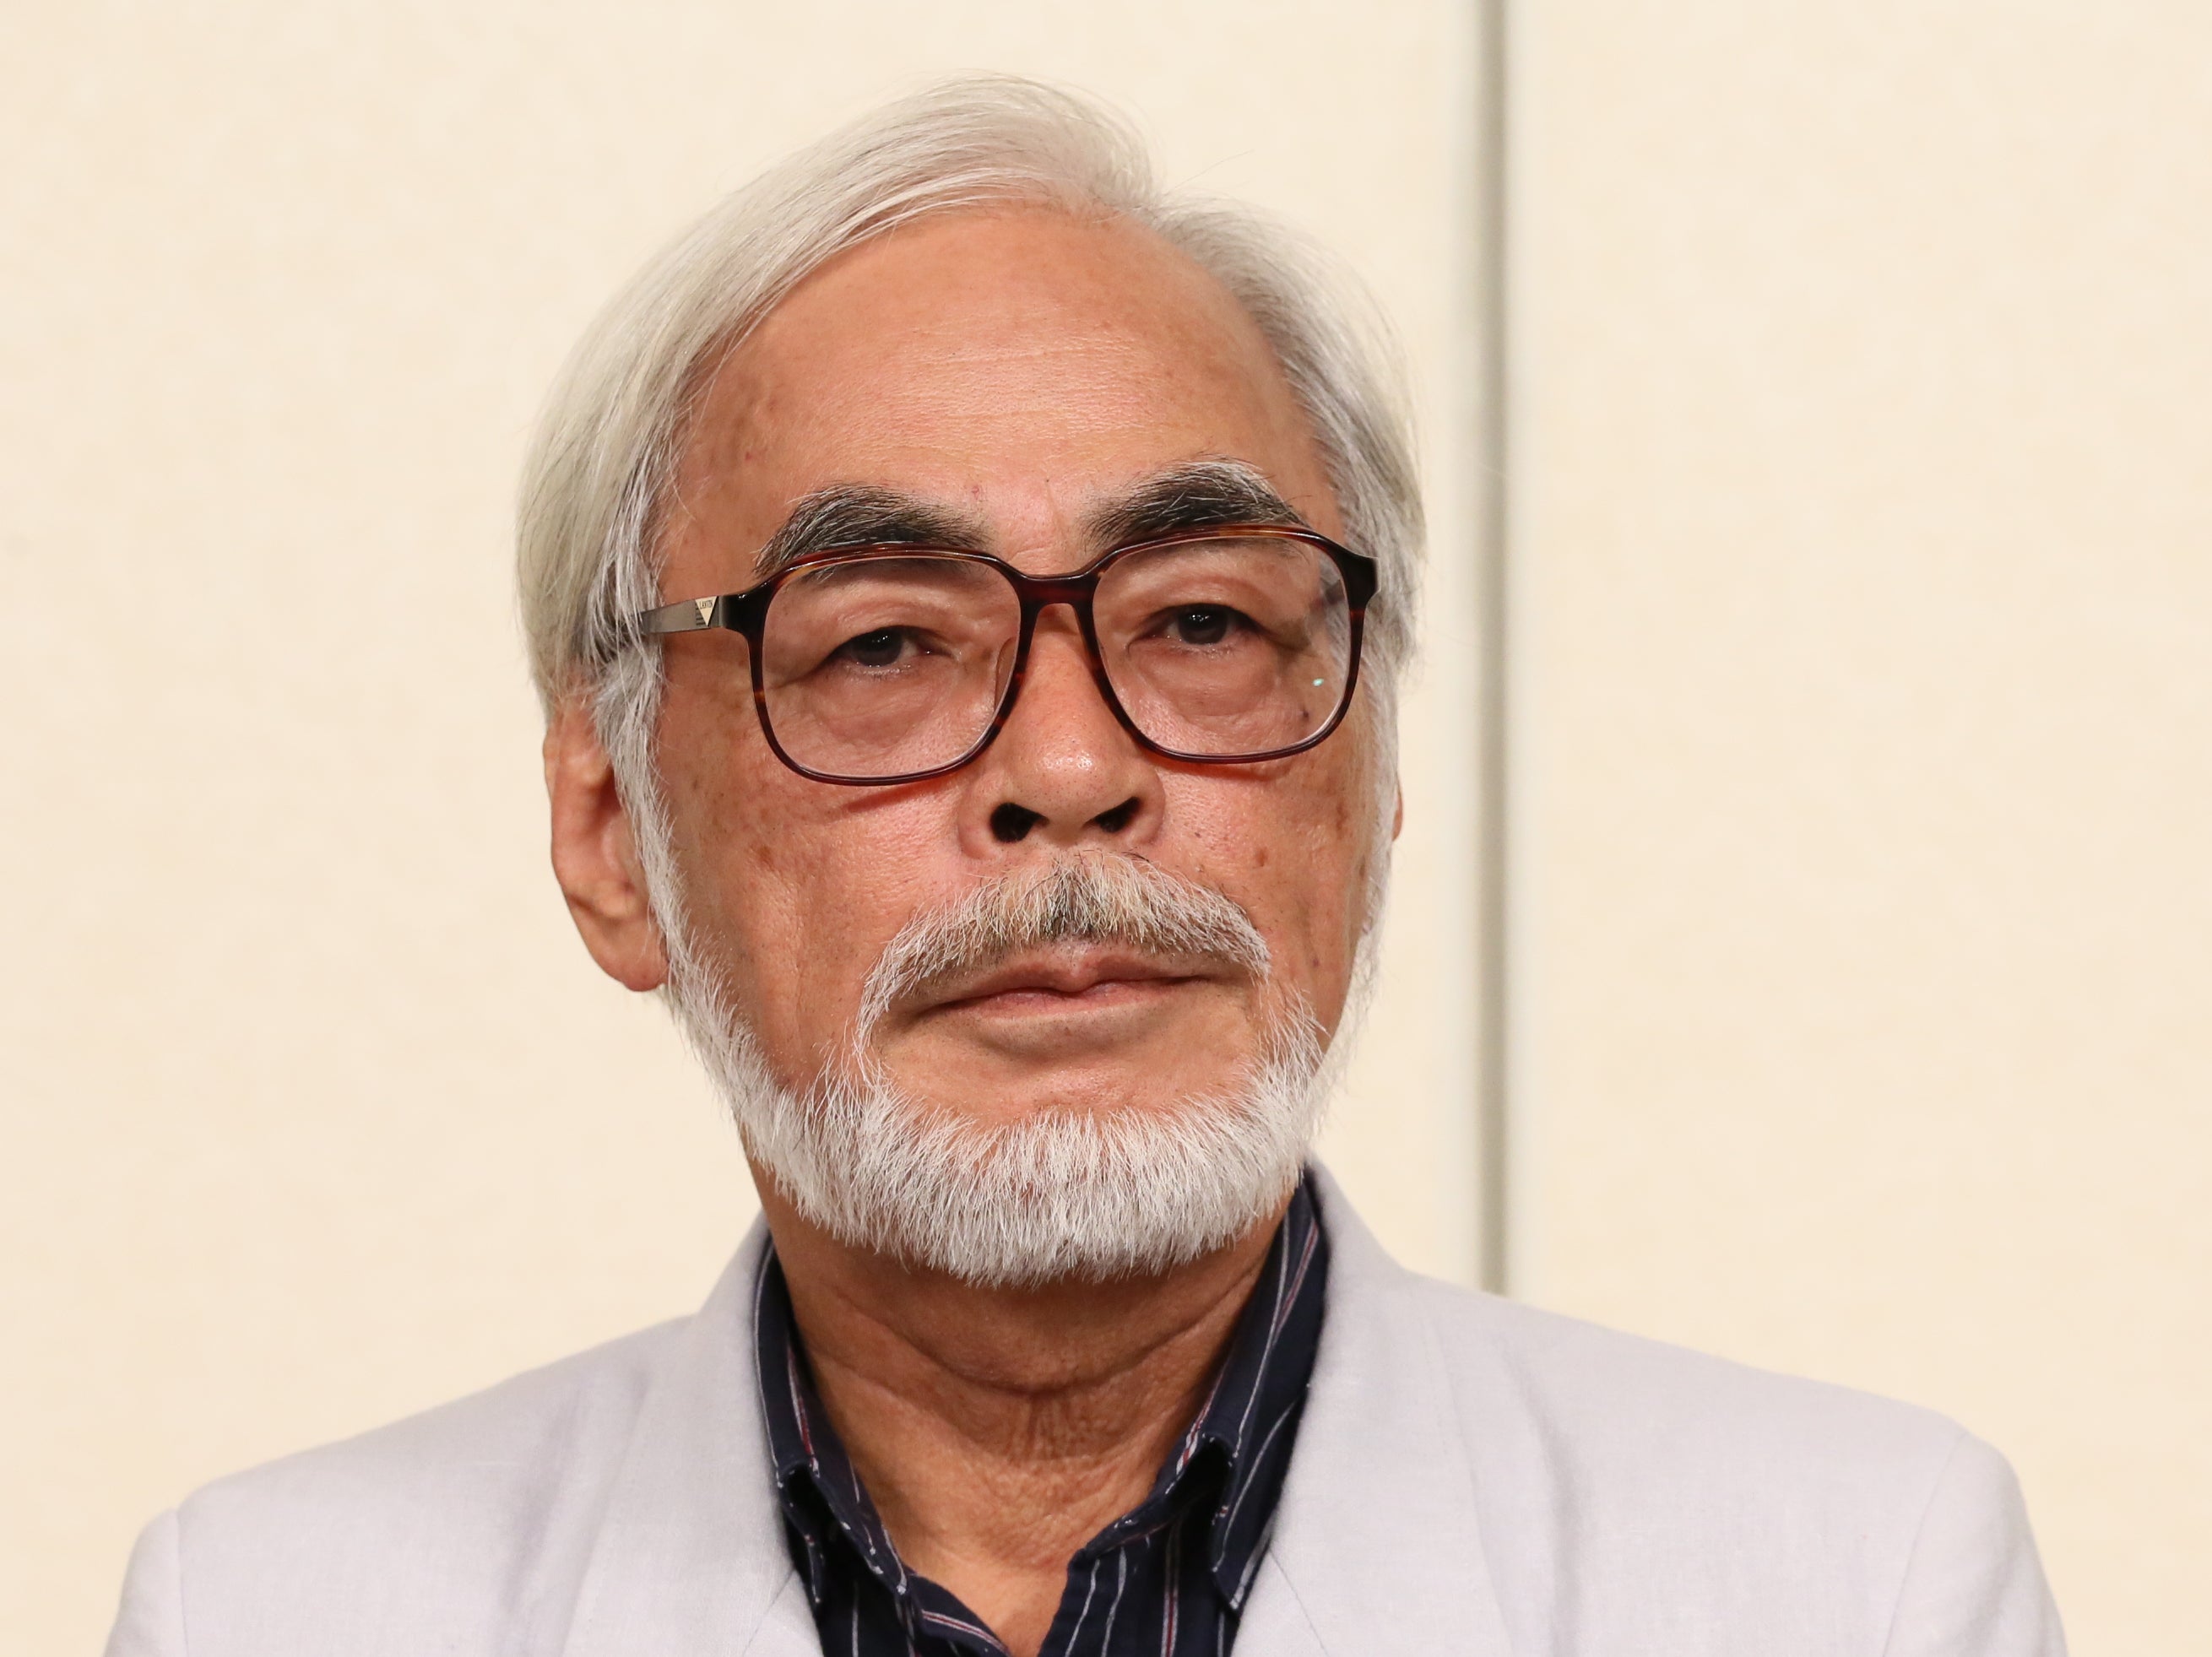 Miyazaki Hayao's 'The Boy and the Heron' is No. 1 at the Box